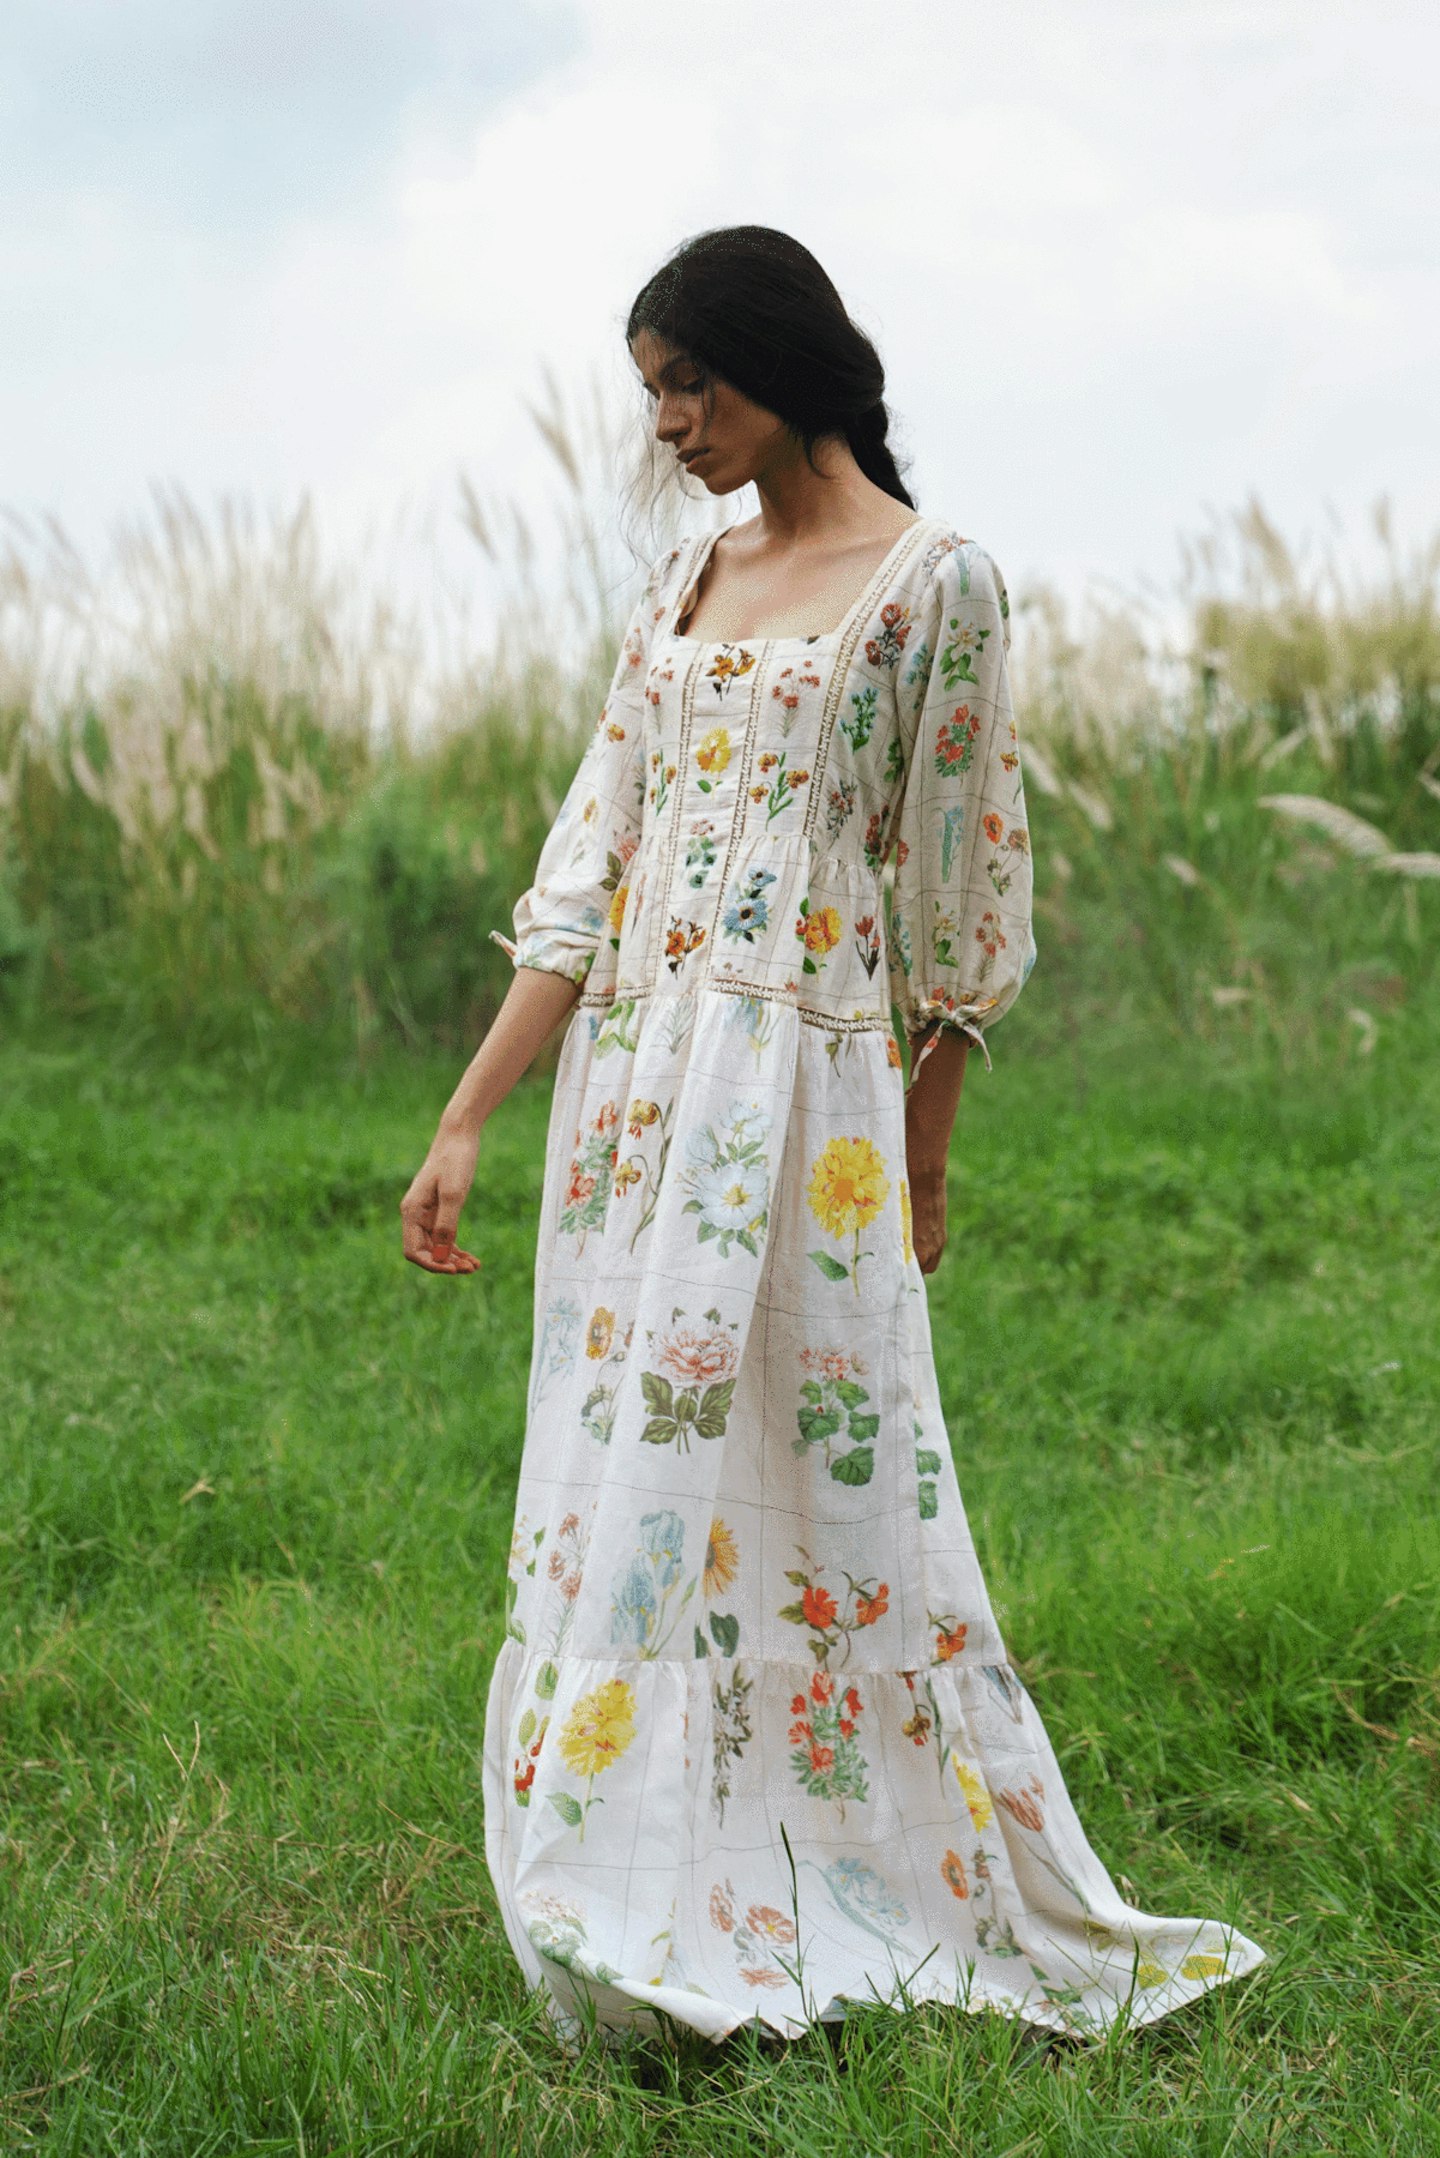 Pozruh, Embroidered Floral Dress, £220 at Omi Na Na